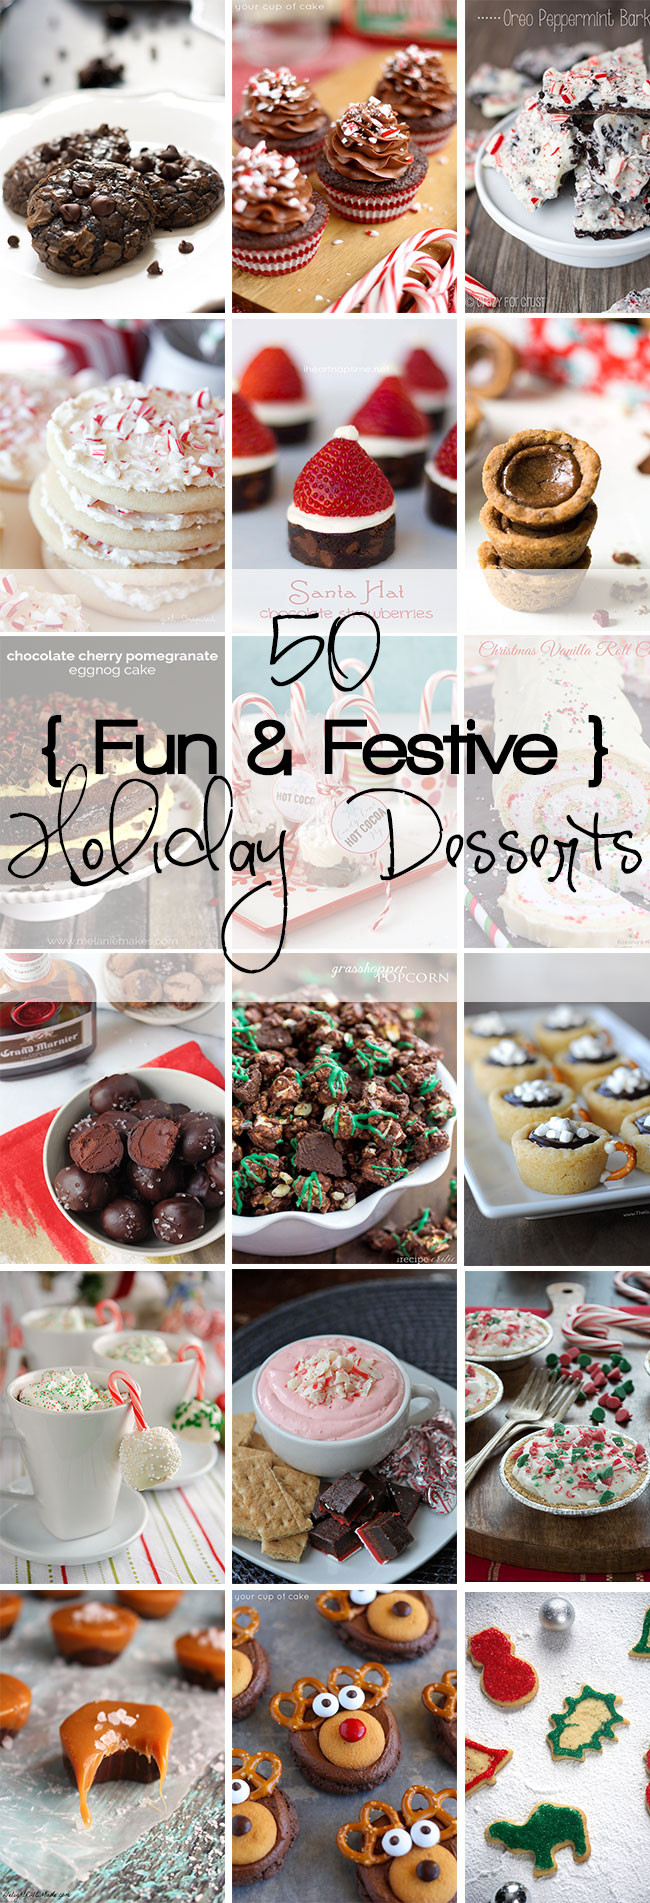 Fun Holiday Desserts
 50 Fun & Festive Holiday Desserts